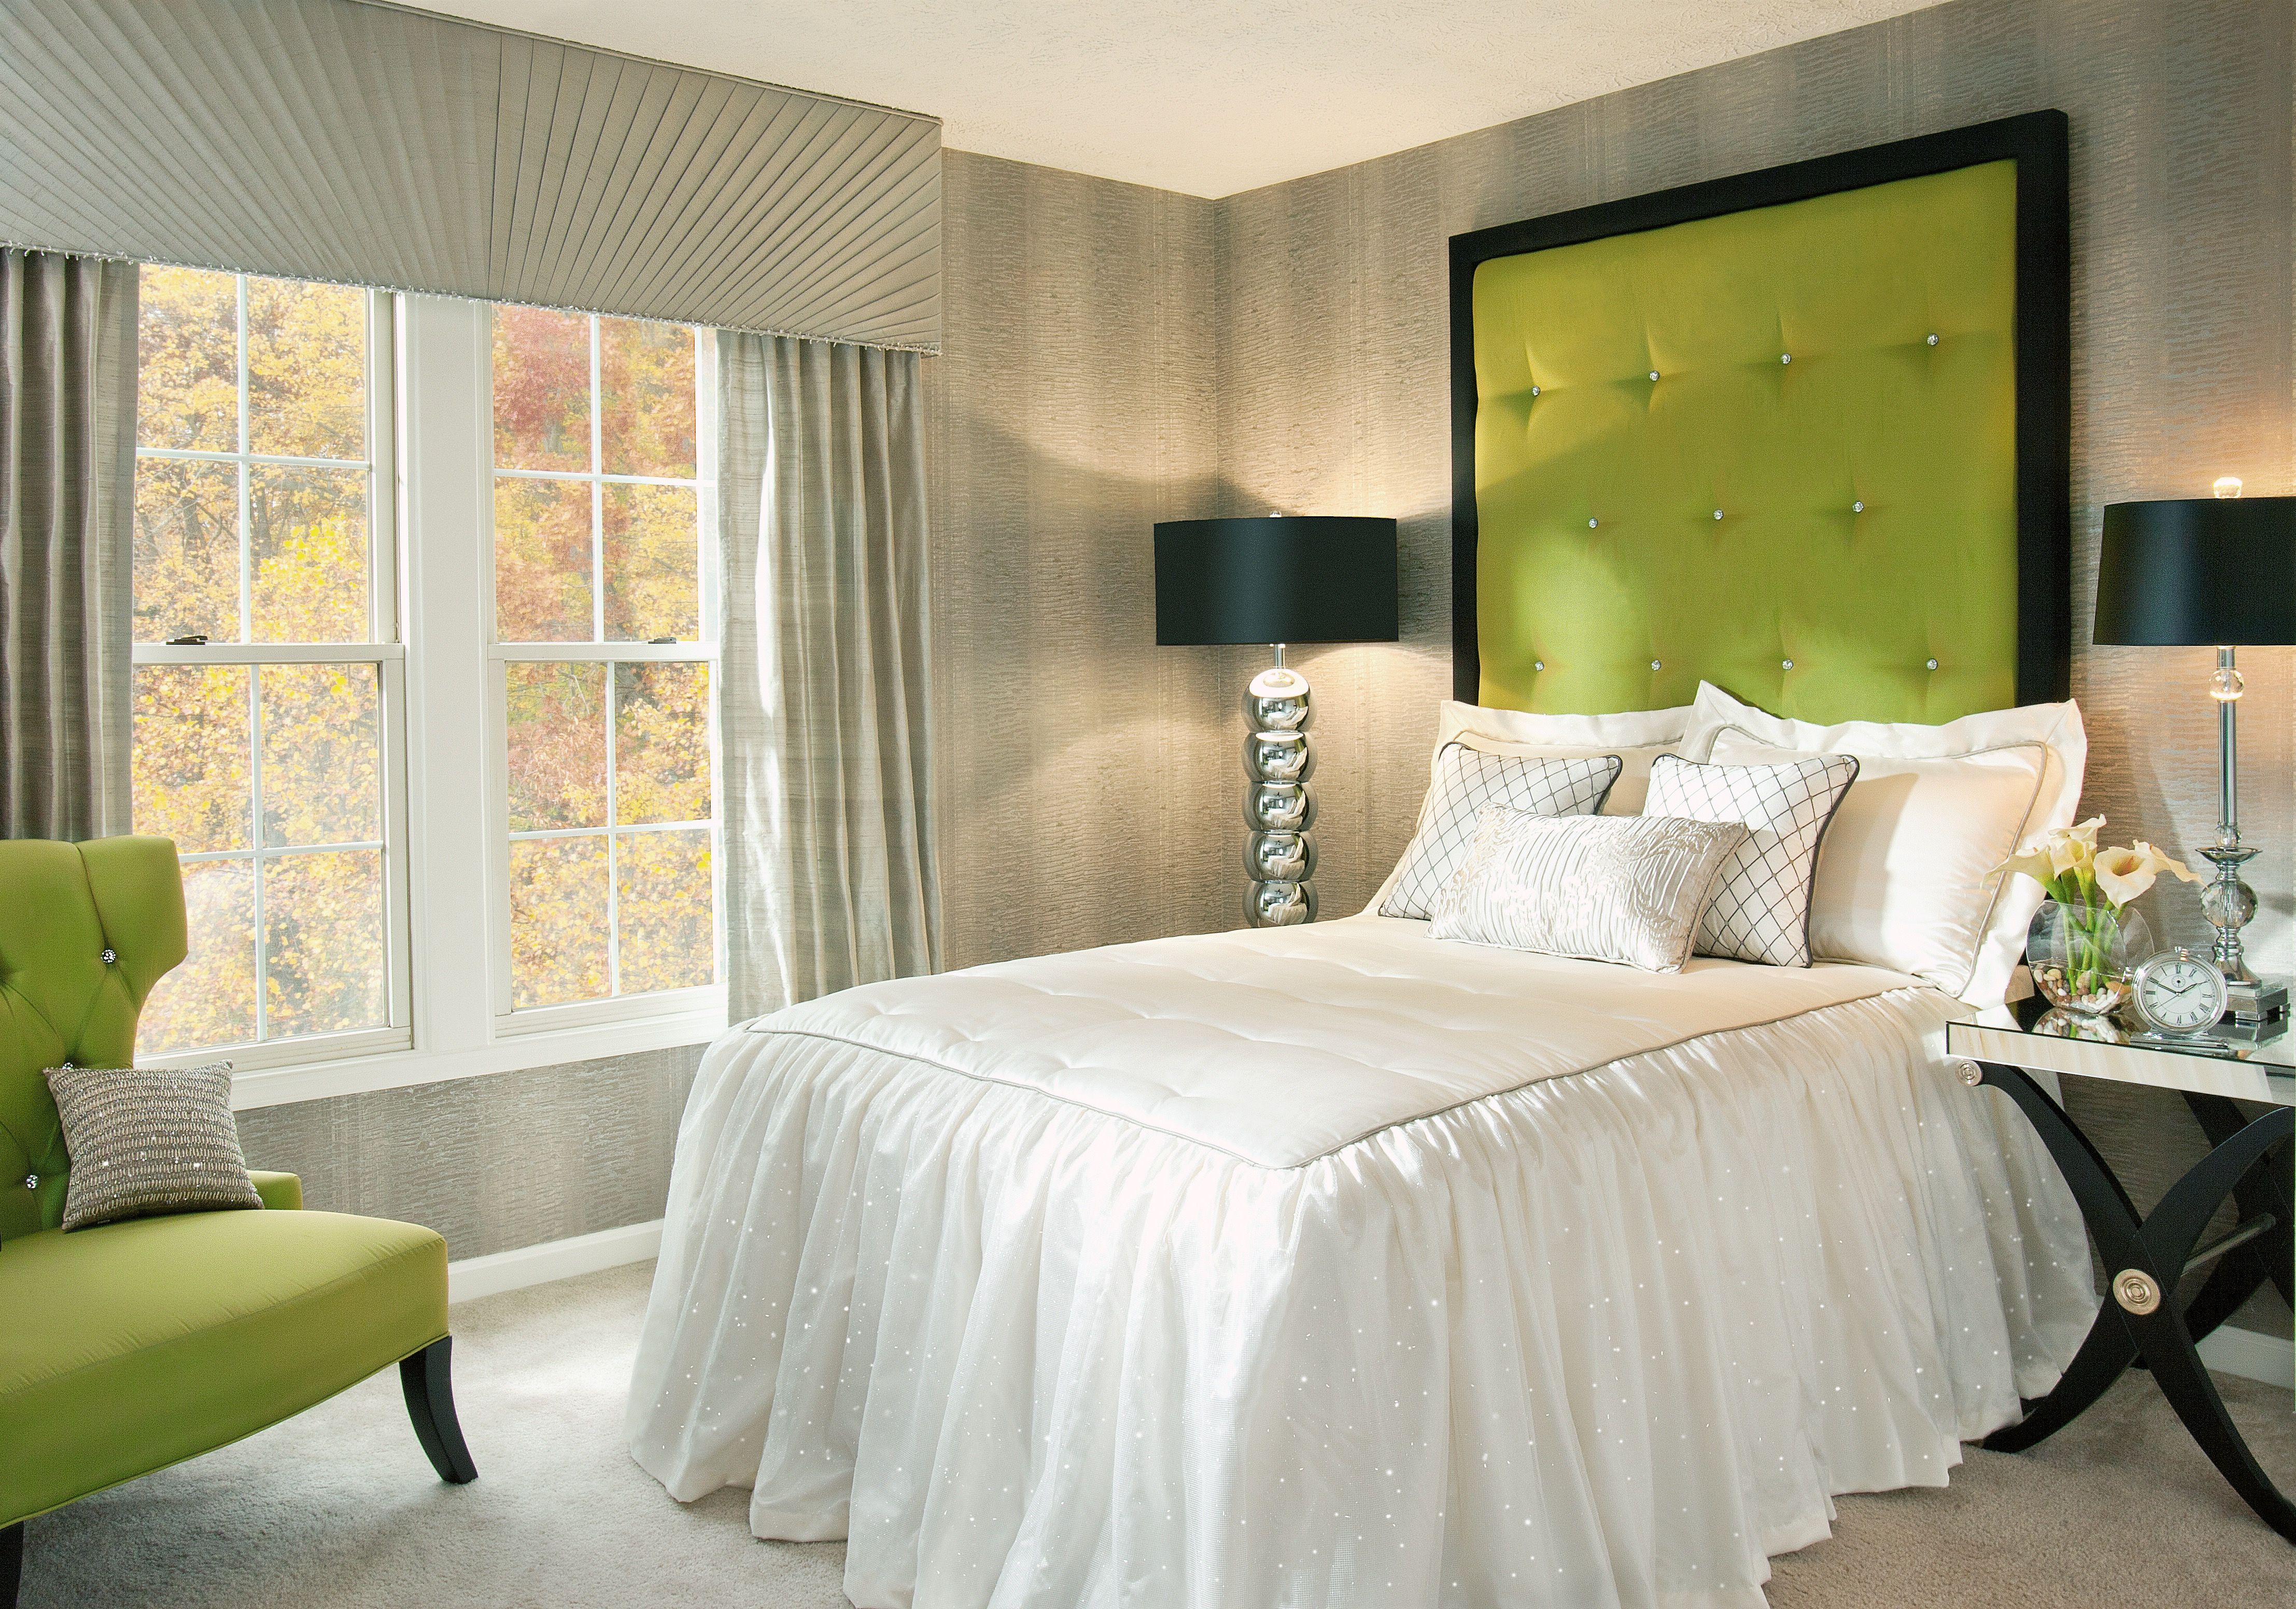 Luxury Design For Small Bedroom Interior Space 16517 Bedroom Ideas